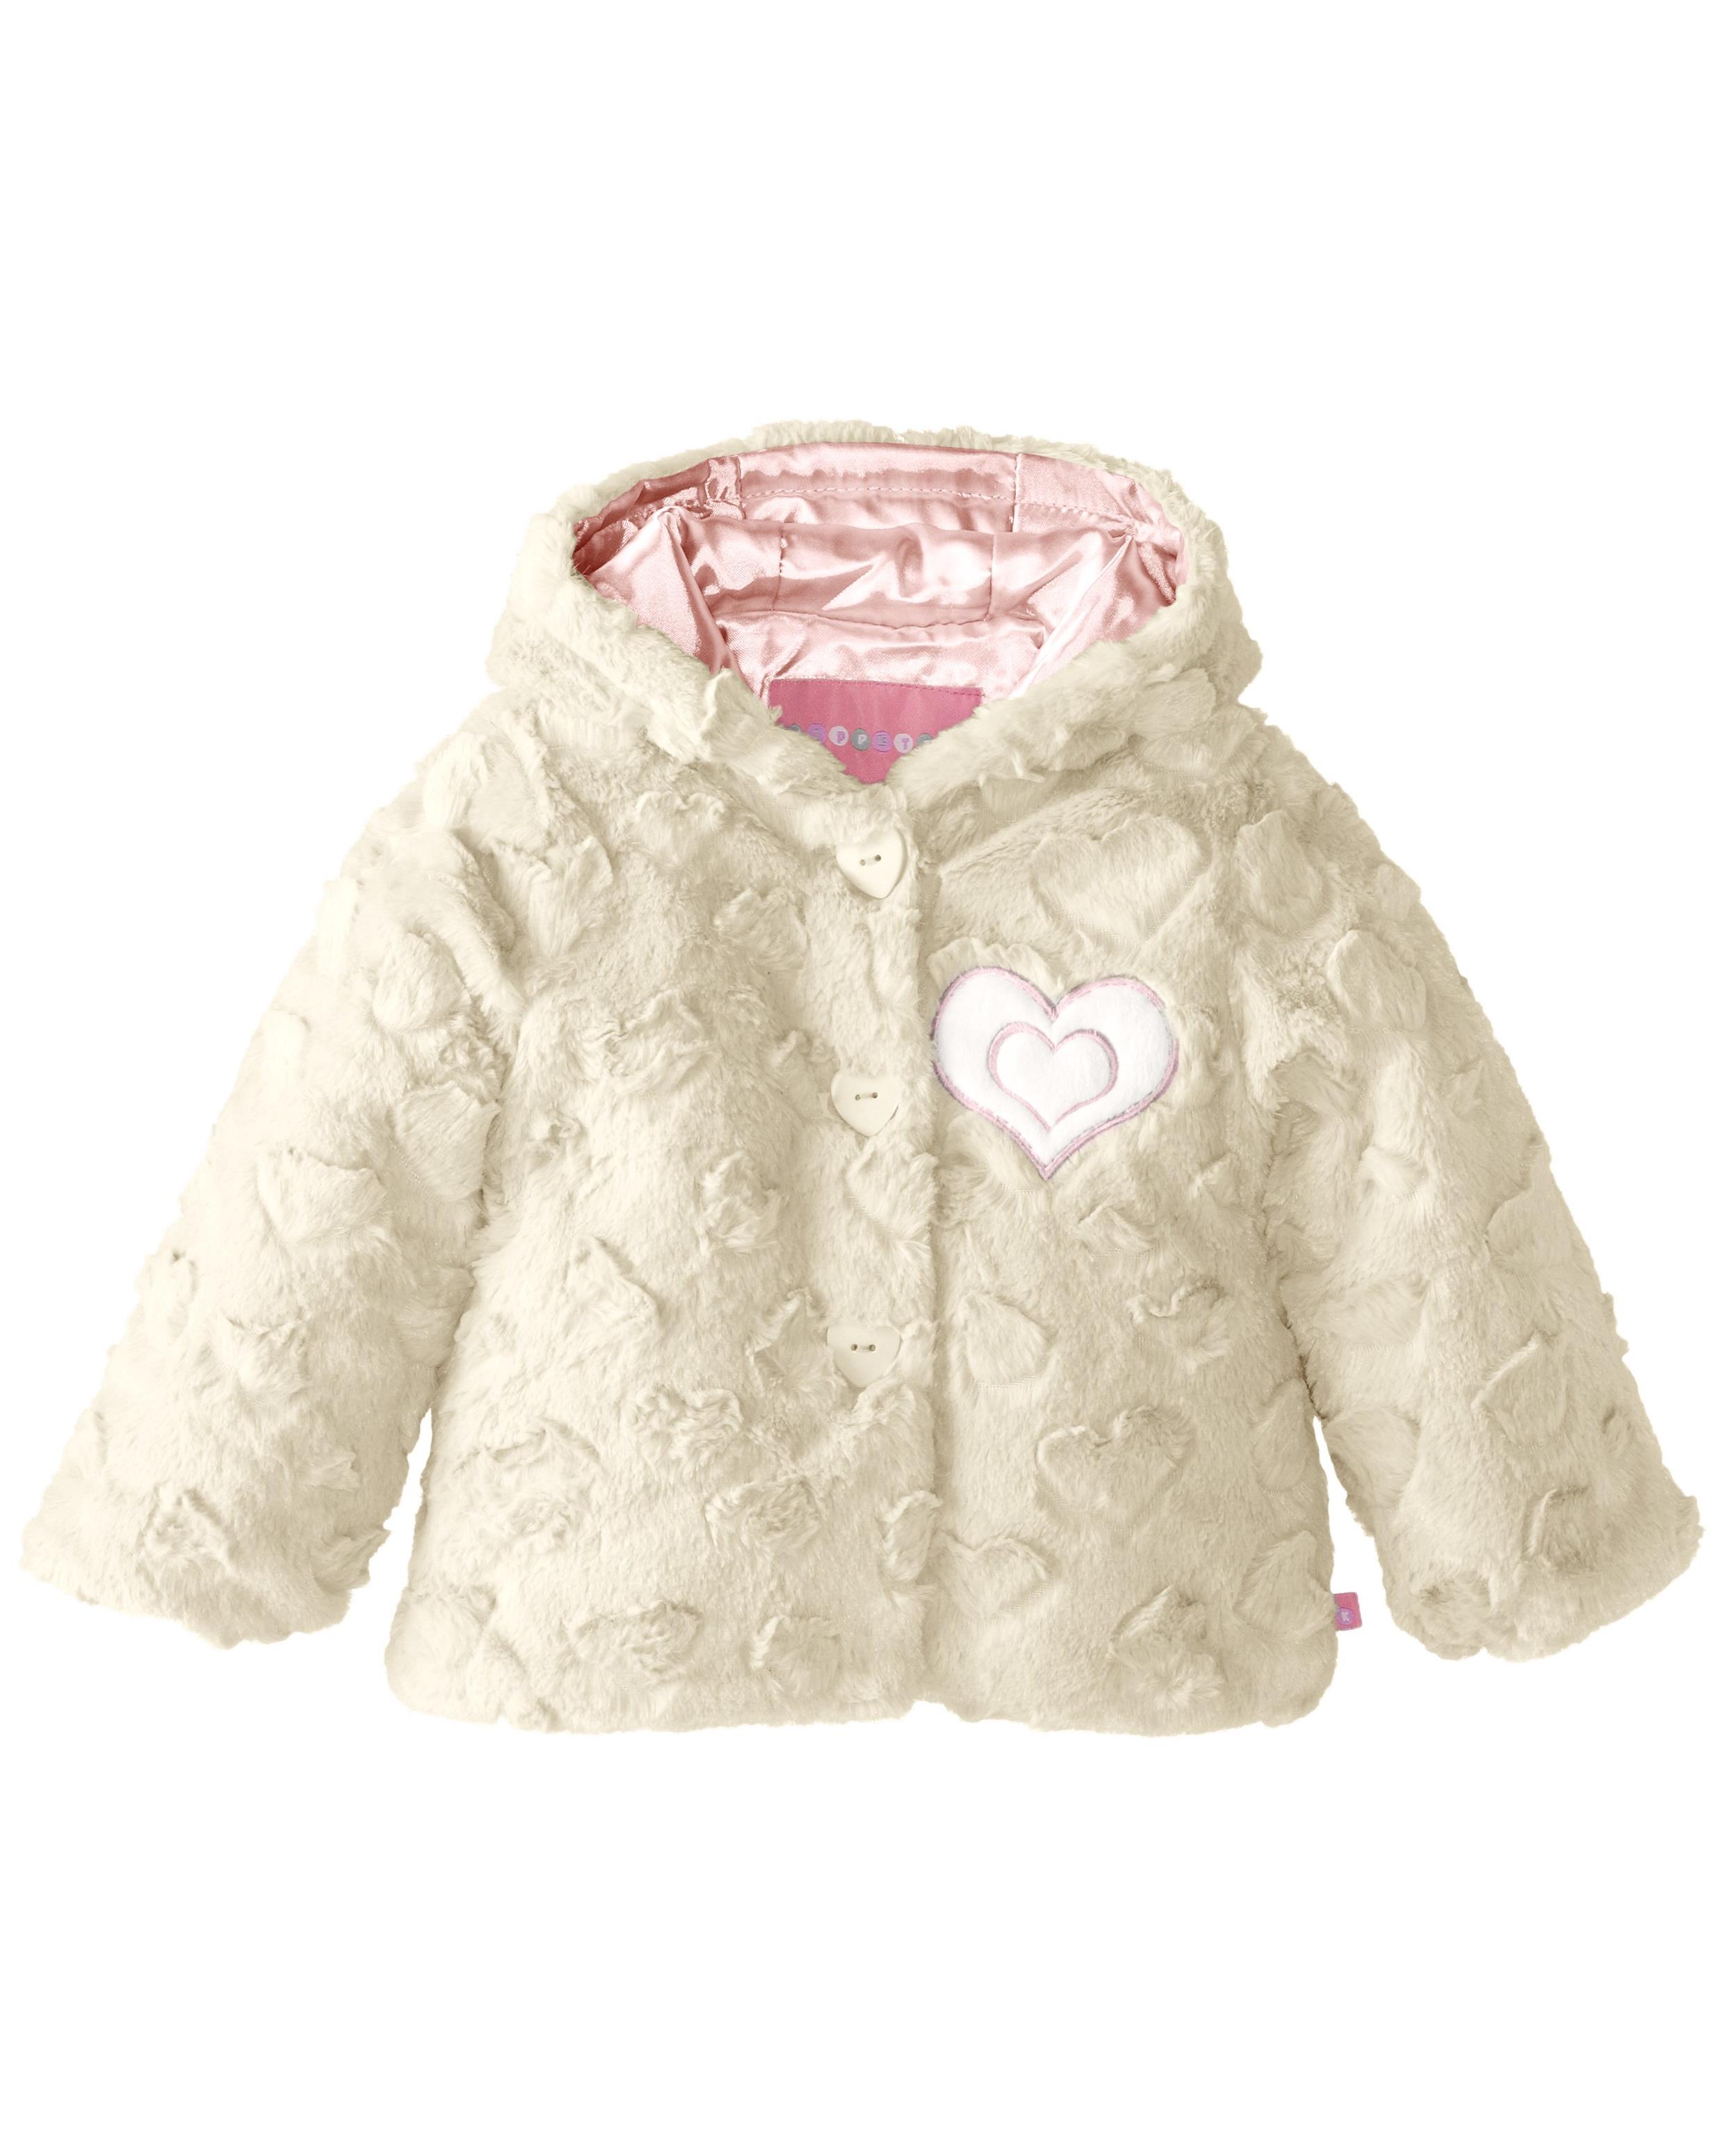 Wippette Little Girls Heart Embossed Fuax Fur Coat, cream, Cream, Size: 3T - image 1 of 1